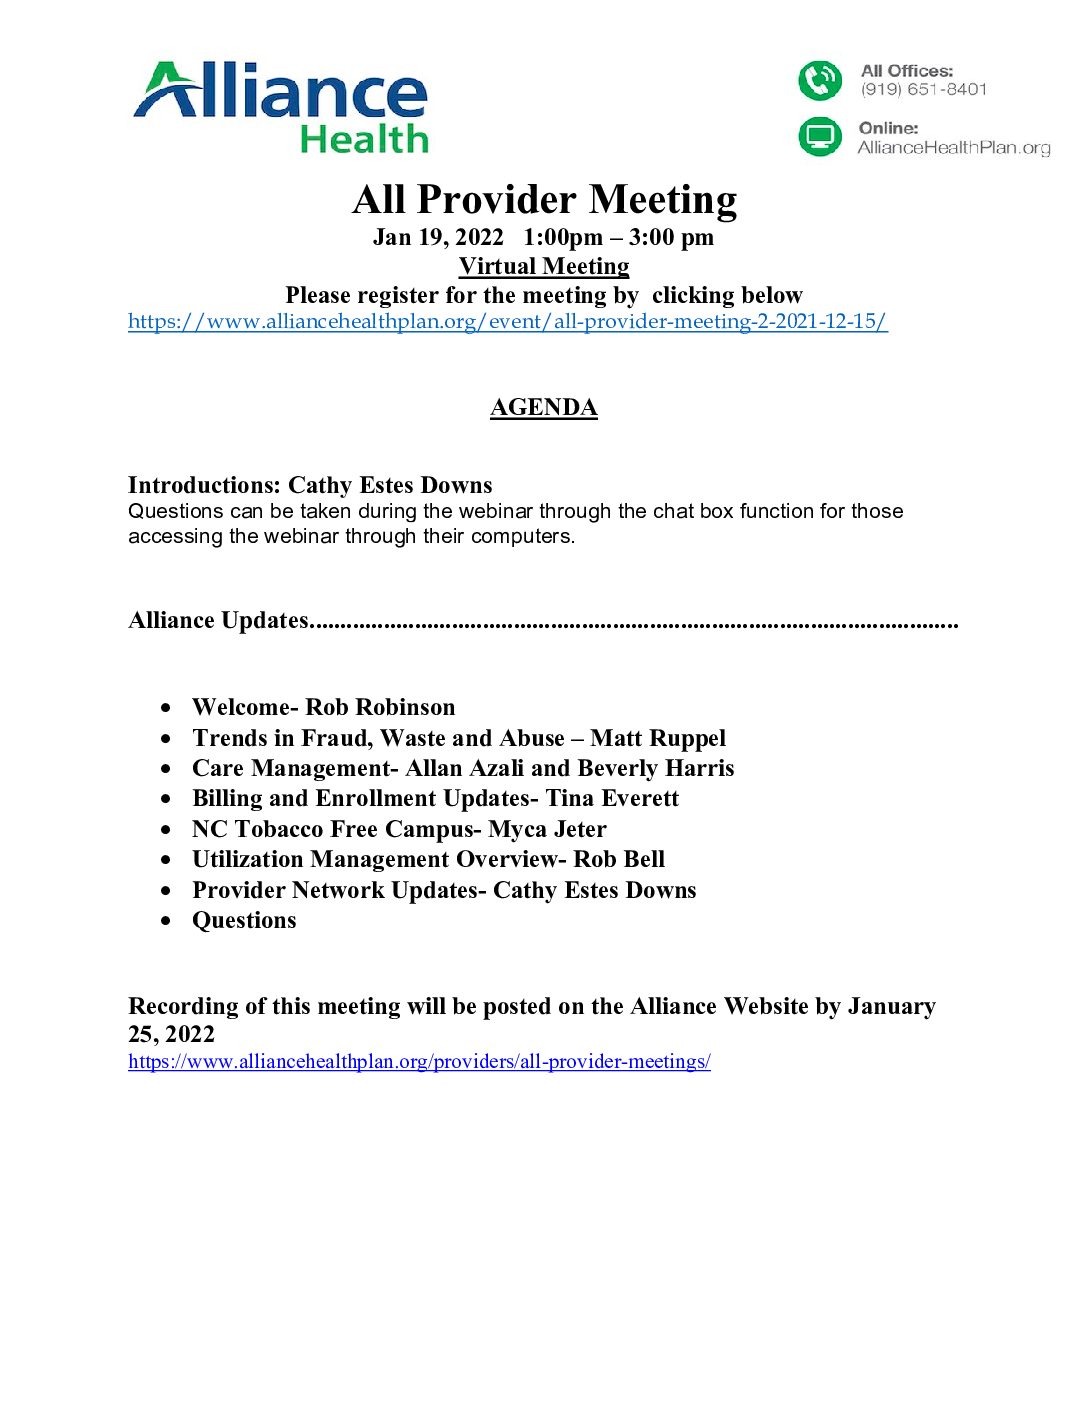 All Provider Meeting Agenda January 2022